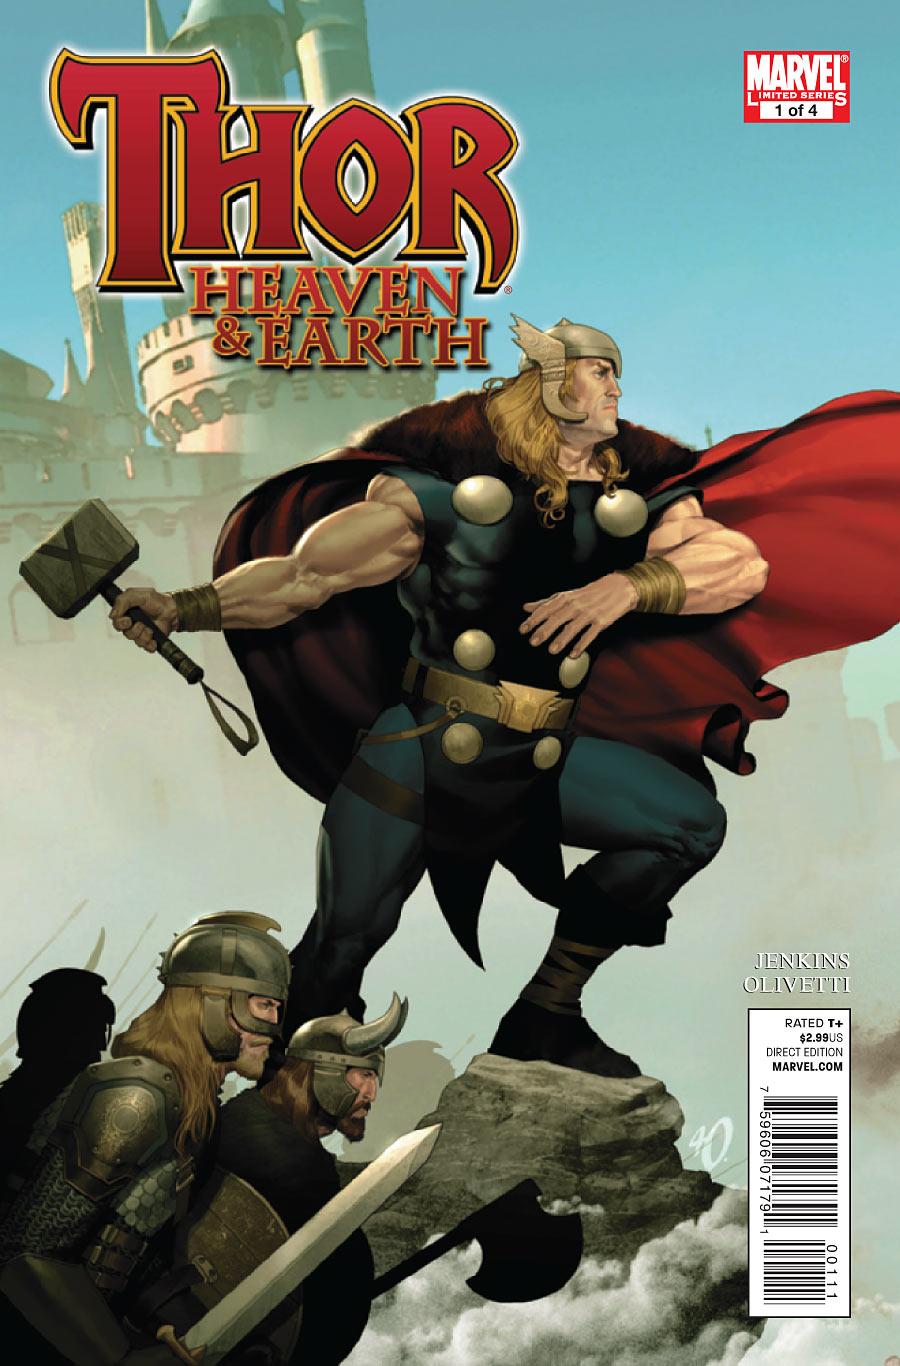 Thor: Heaven & Earth Vol. 1 #1